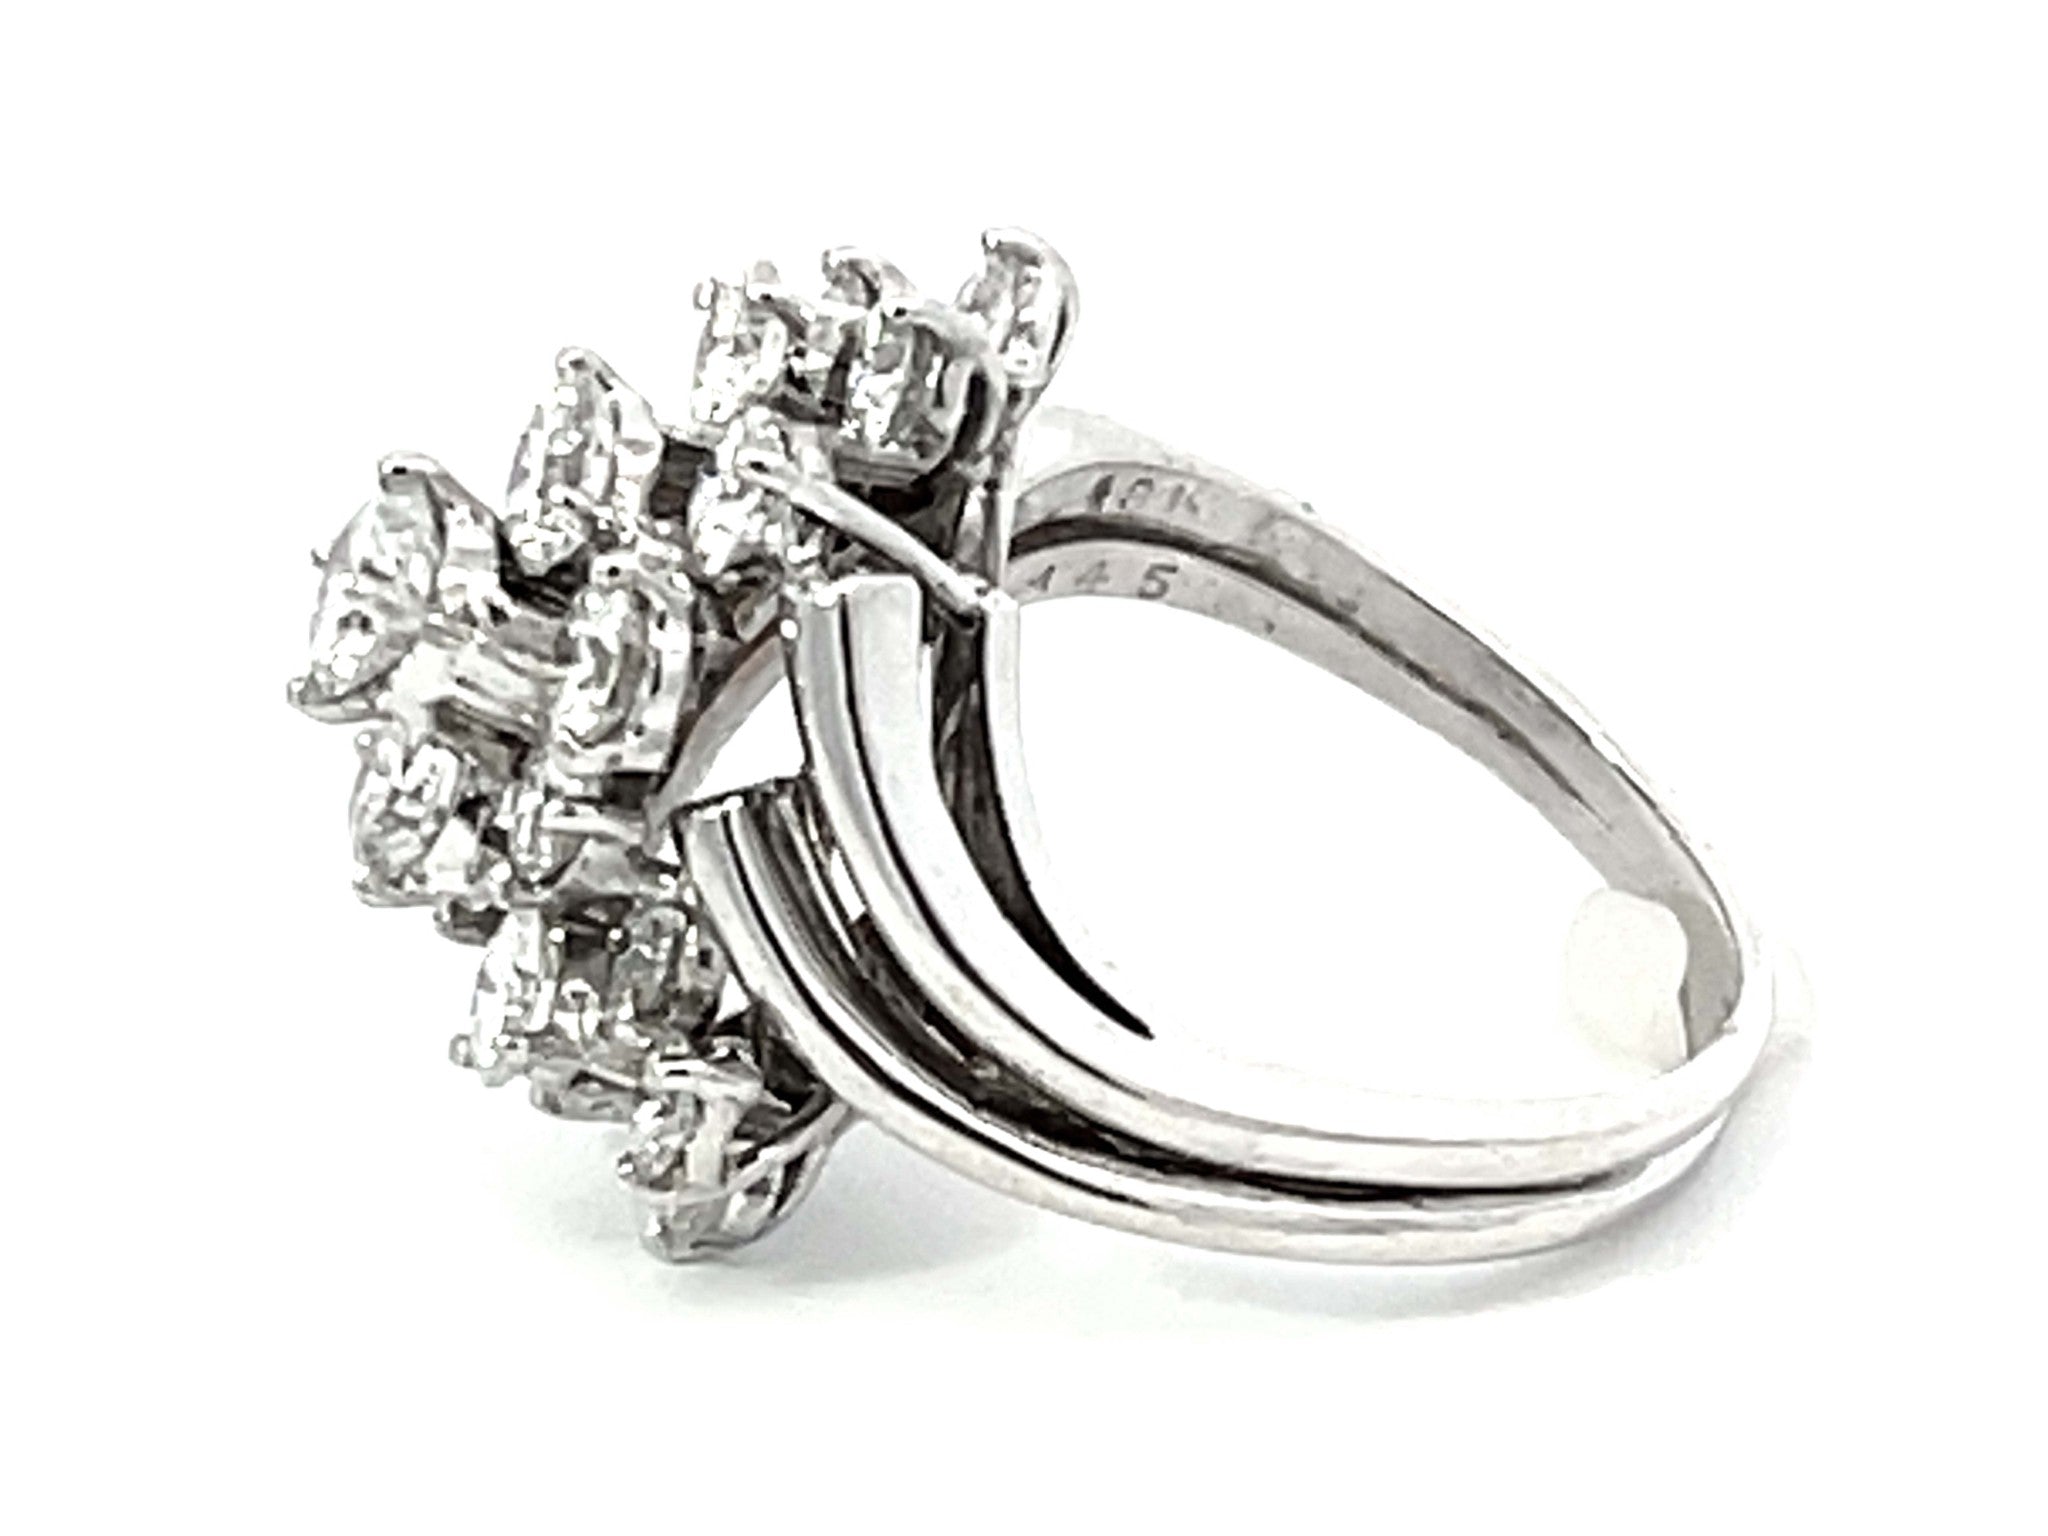 2 Carat Diamond Cluster Ring 18k White Gold